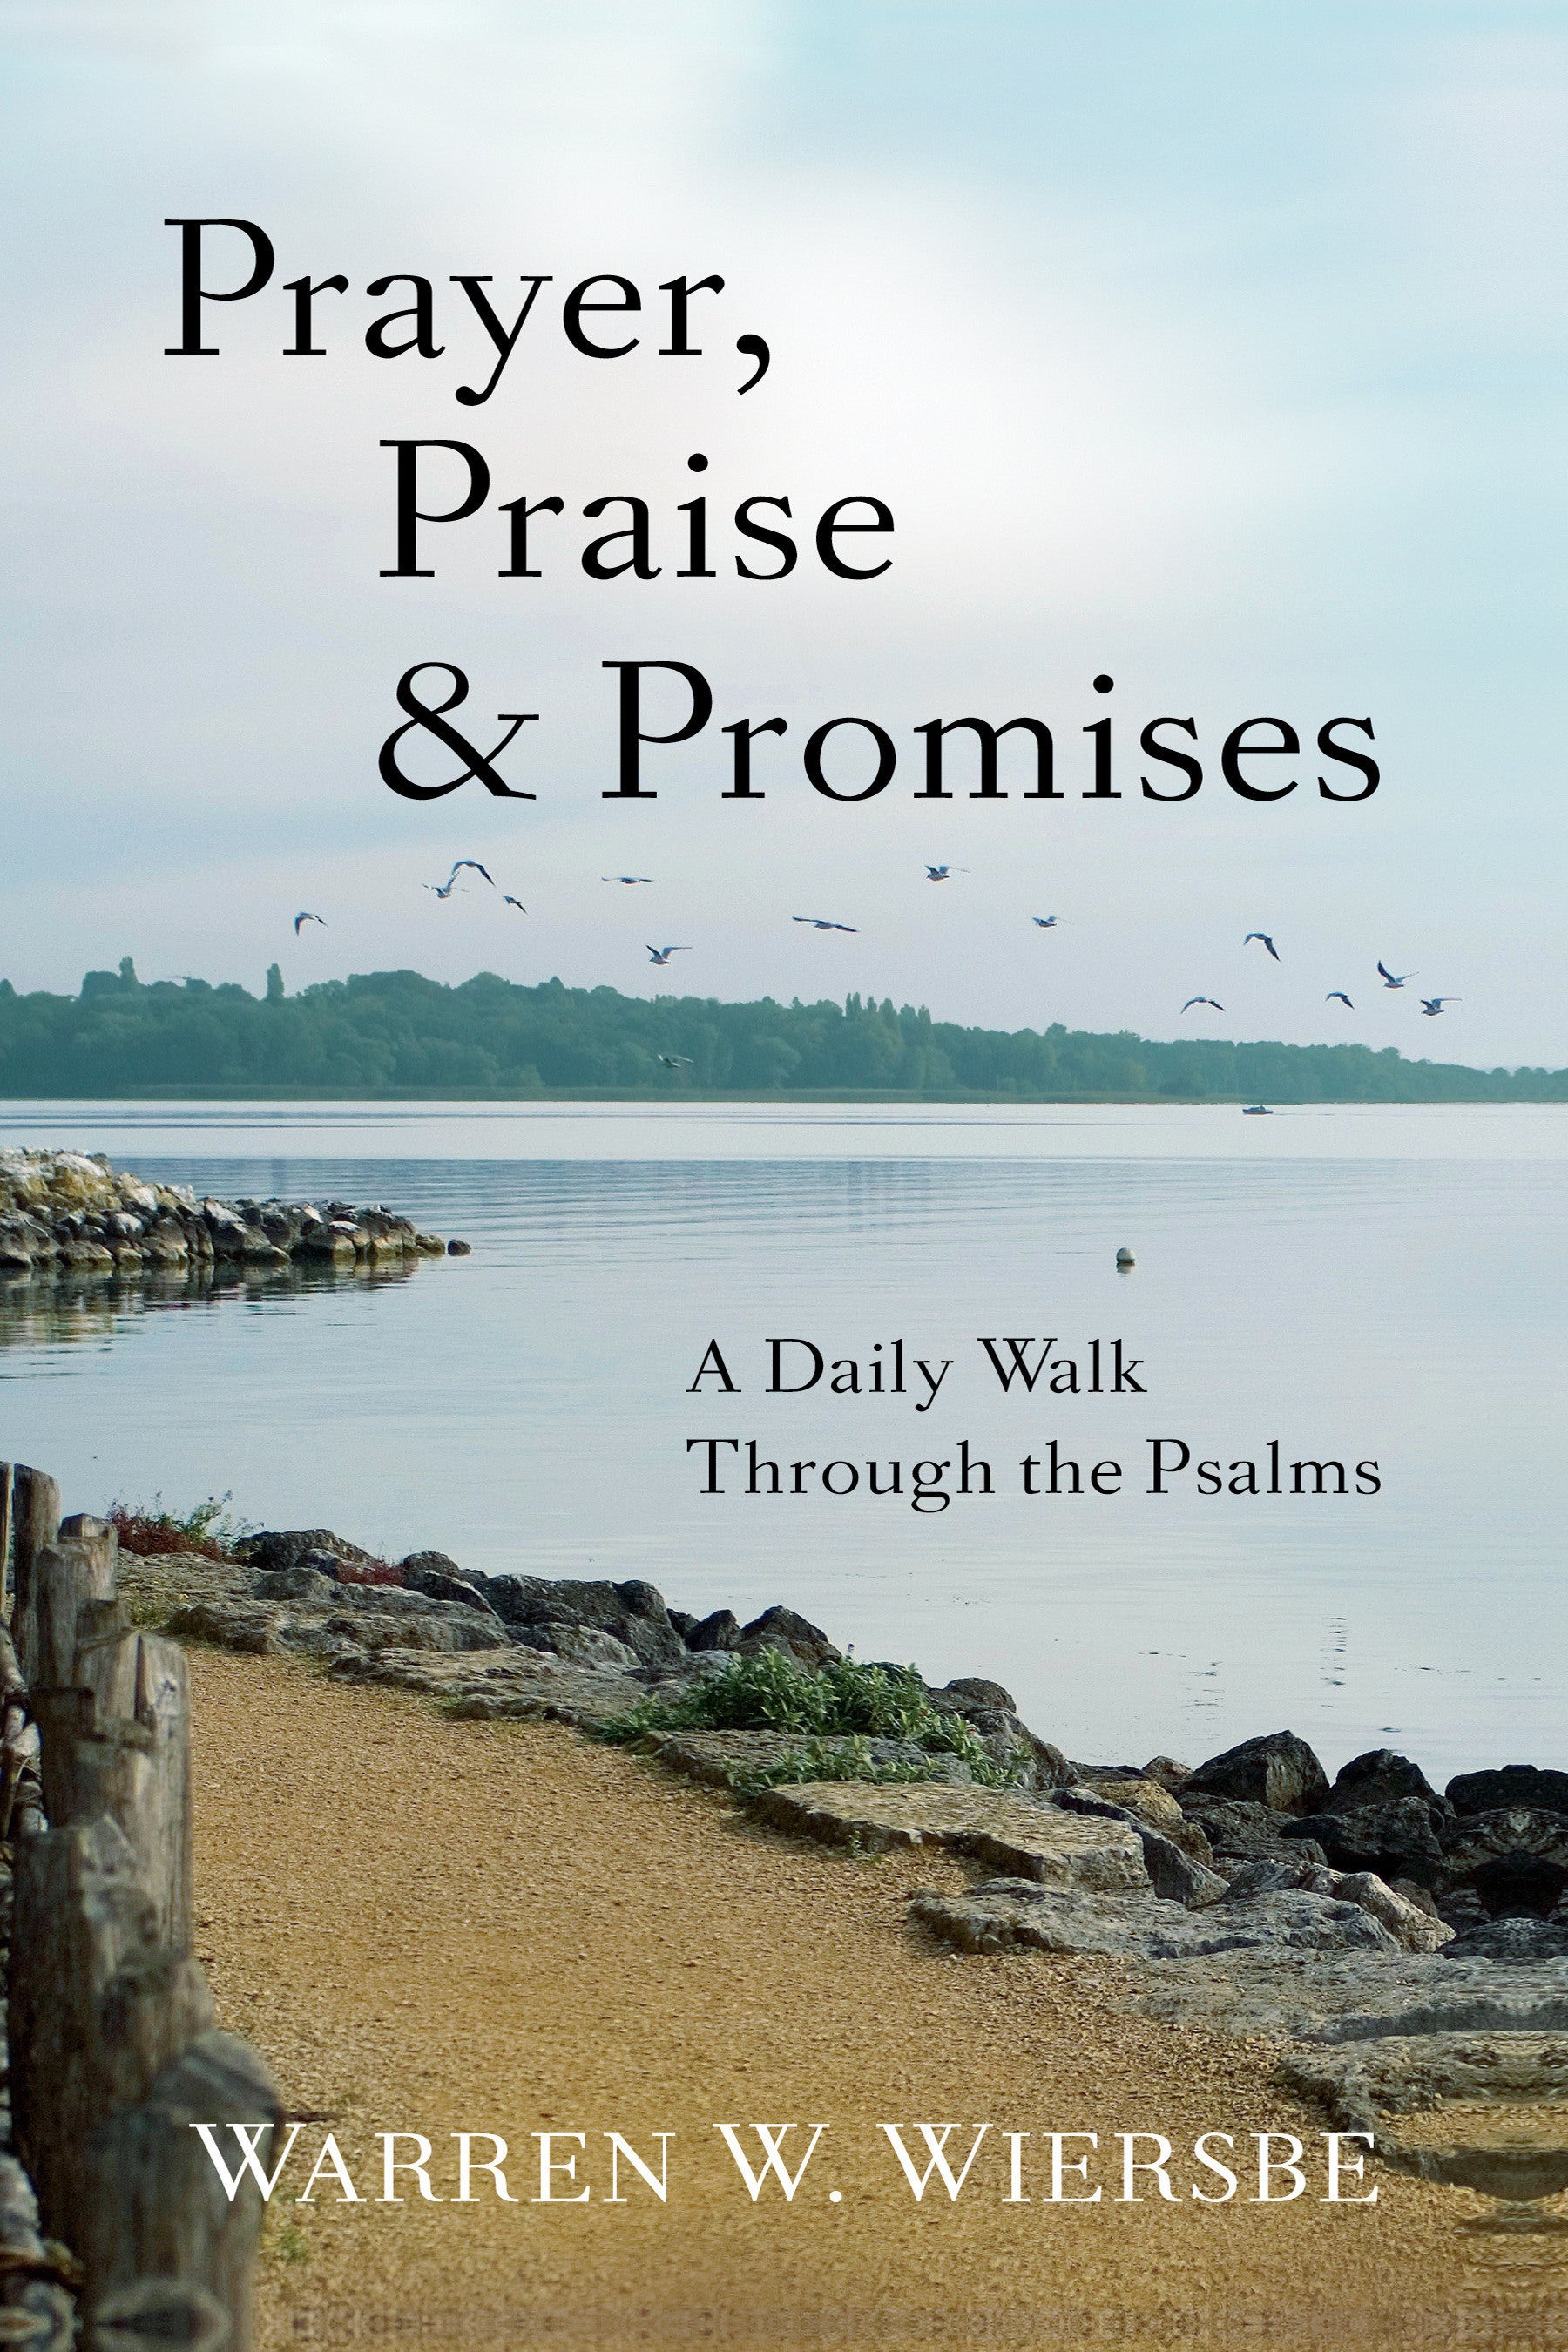 Image of Prayer, Praise & Promises other